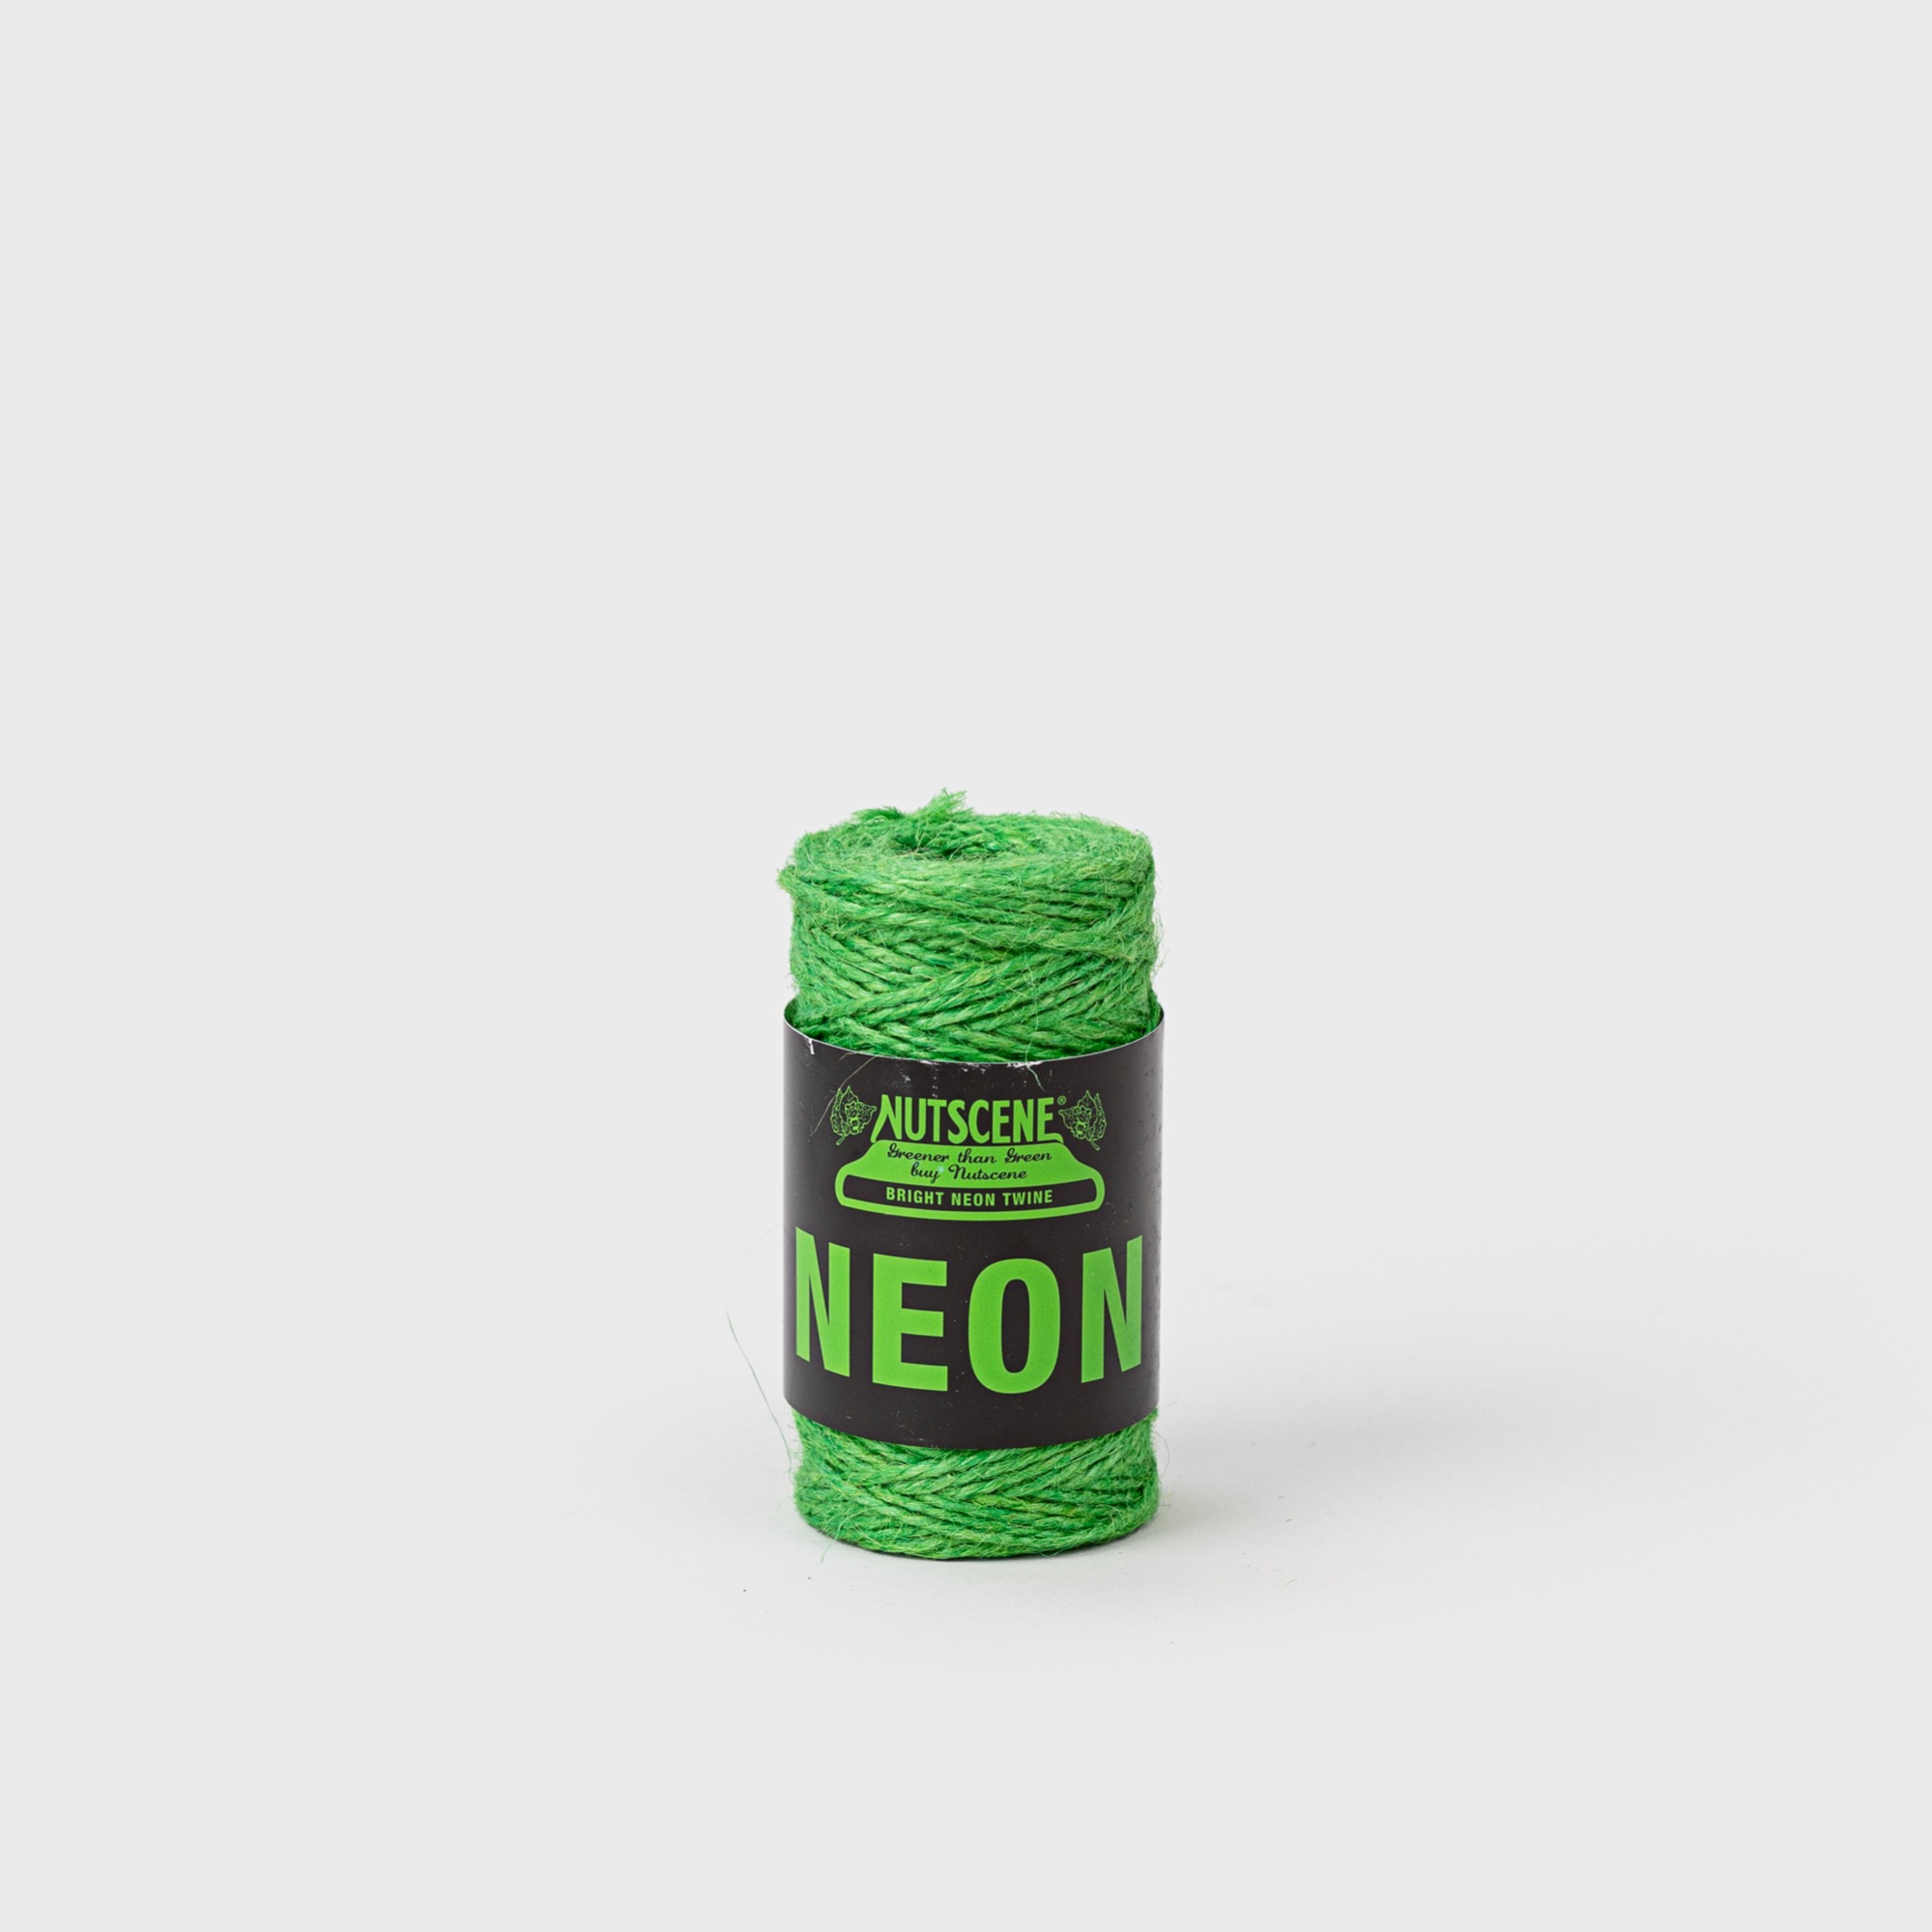 Nutscene Neon Spools 90M - Green